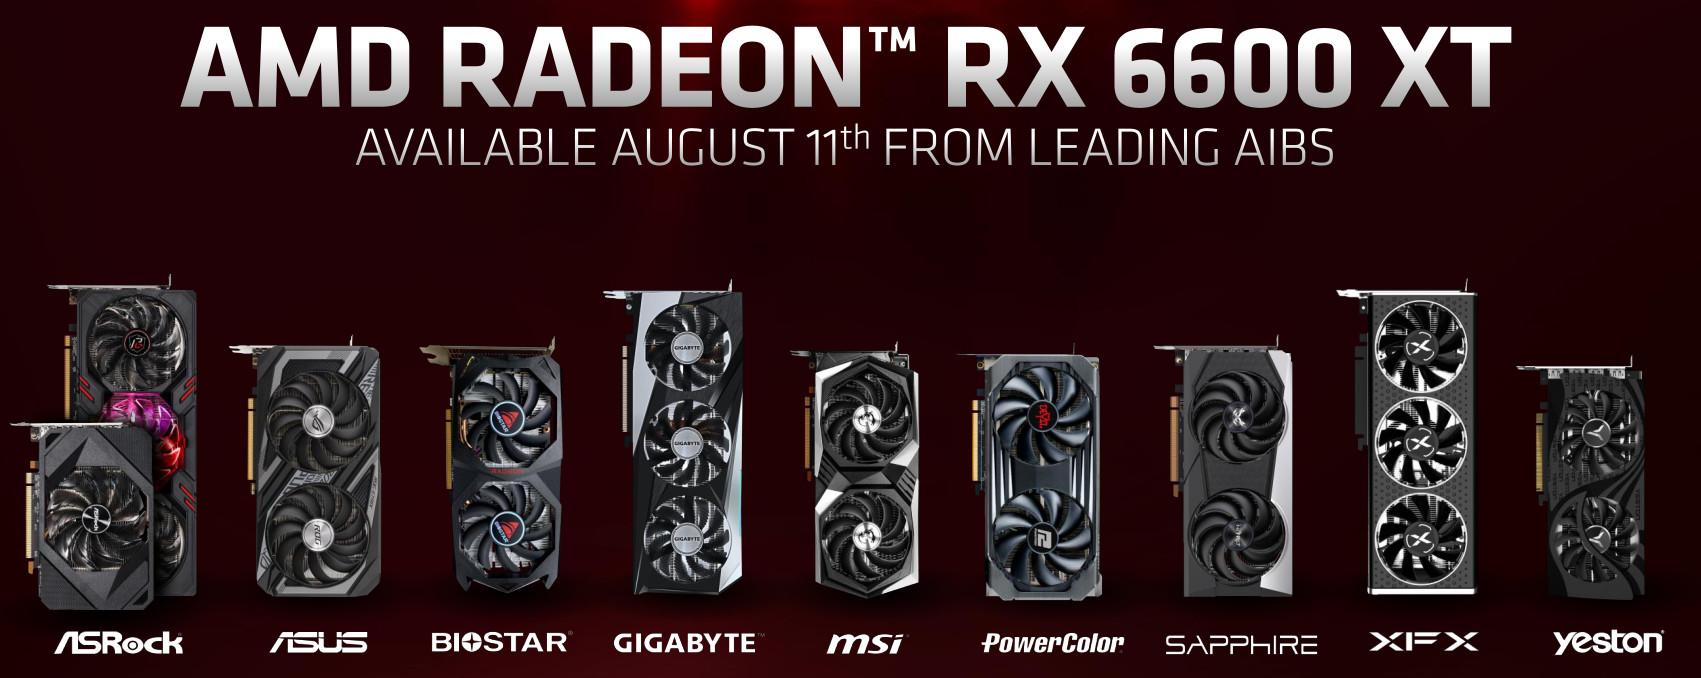 Qui veut du custom d'AMD RX 6600 XT bien frais ?